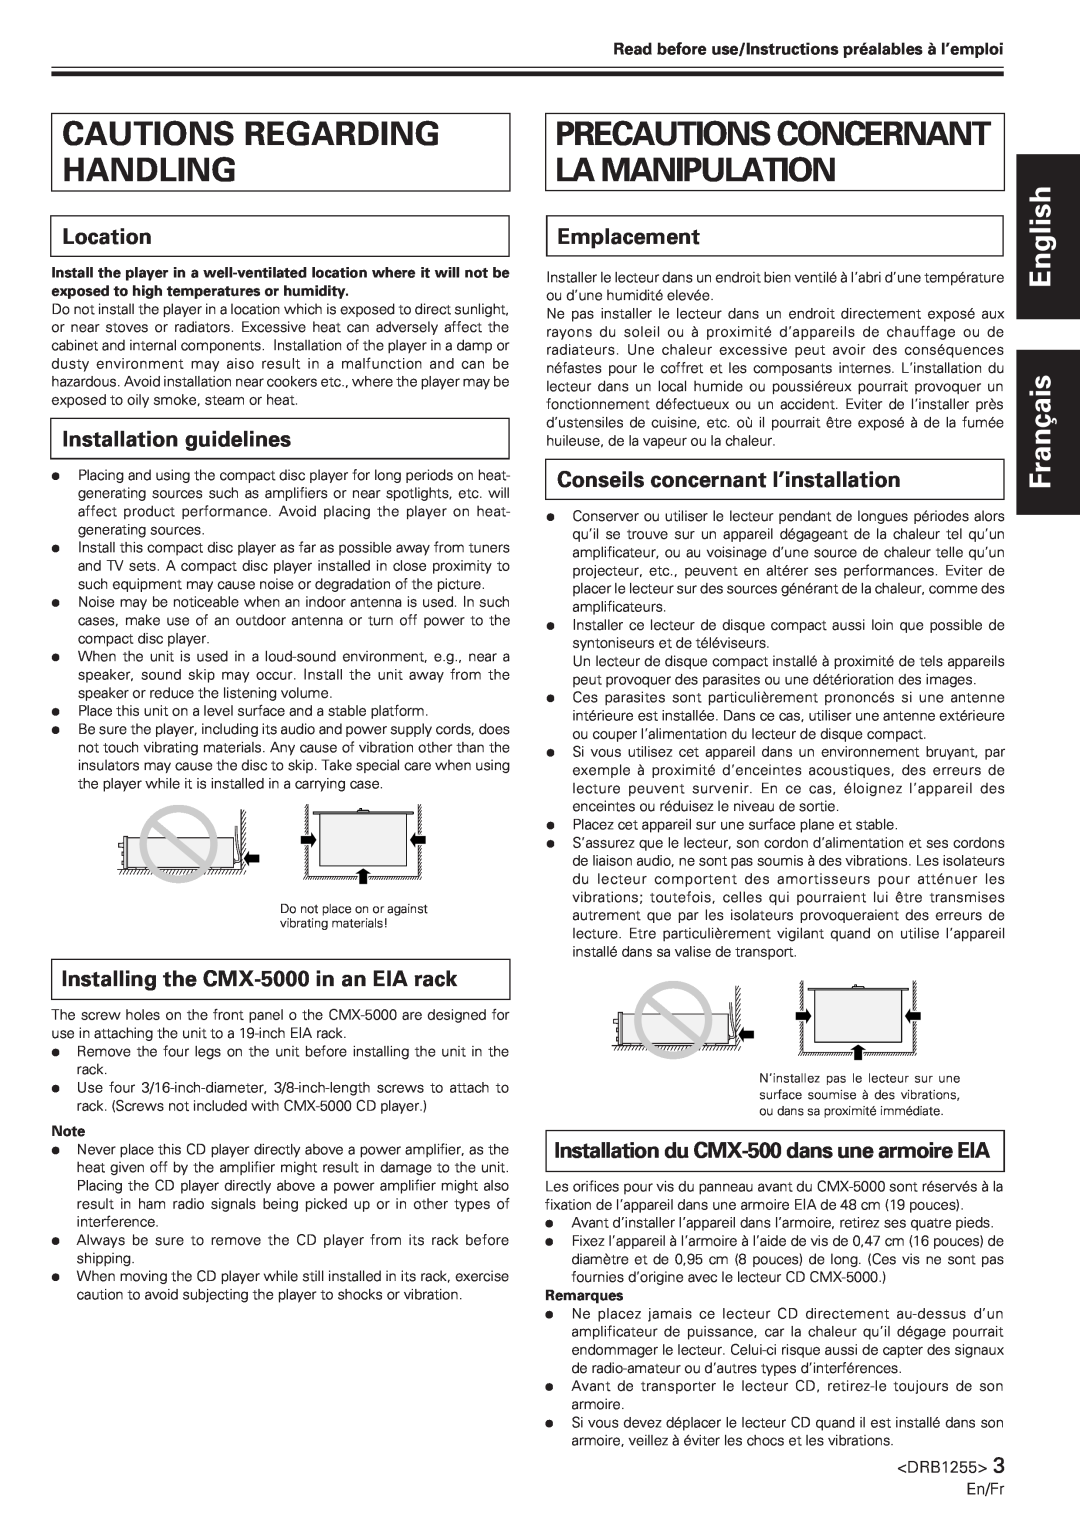 Pioneer CMX-5000 manual Cautions Regarding Handling, La Manipulation, English, Français, Location, Installation guidelines 